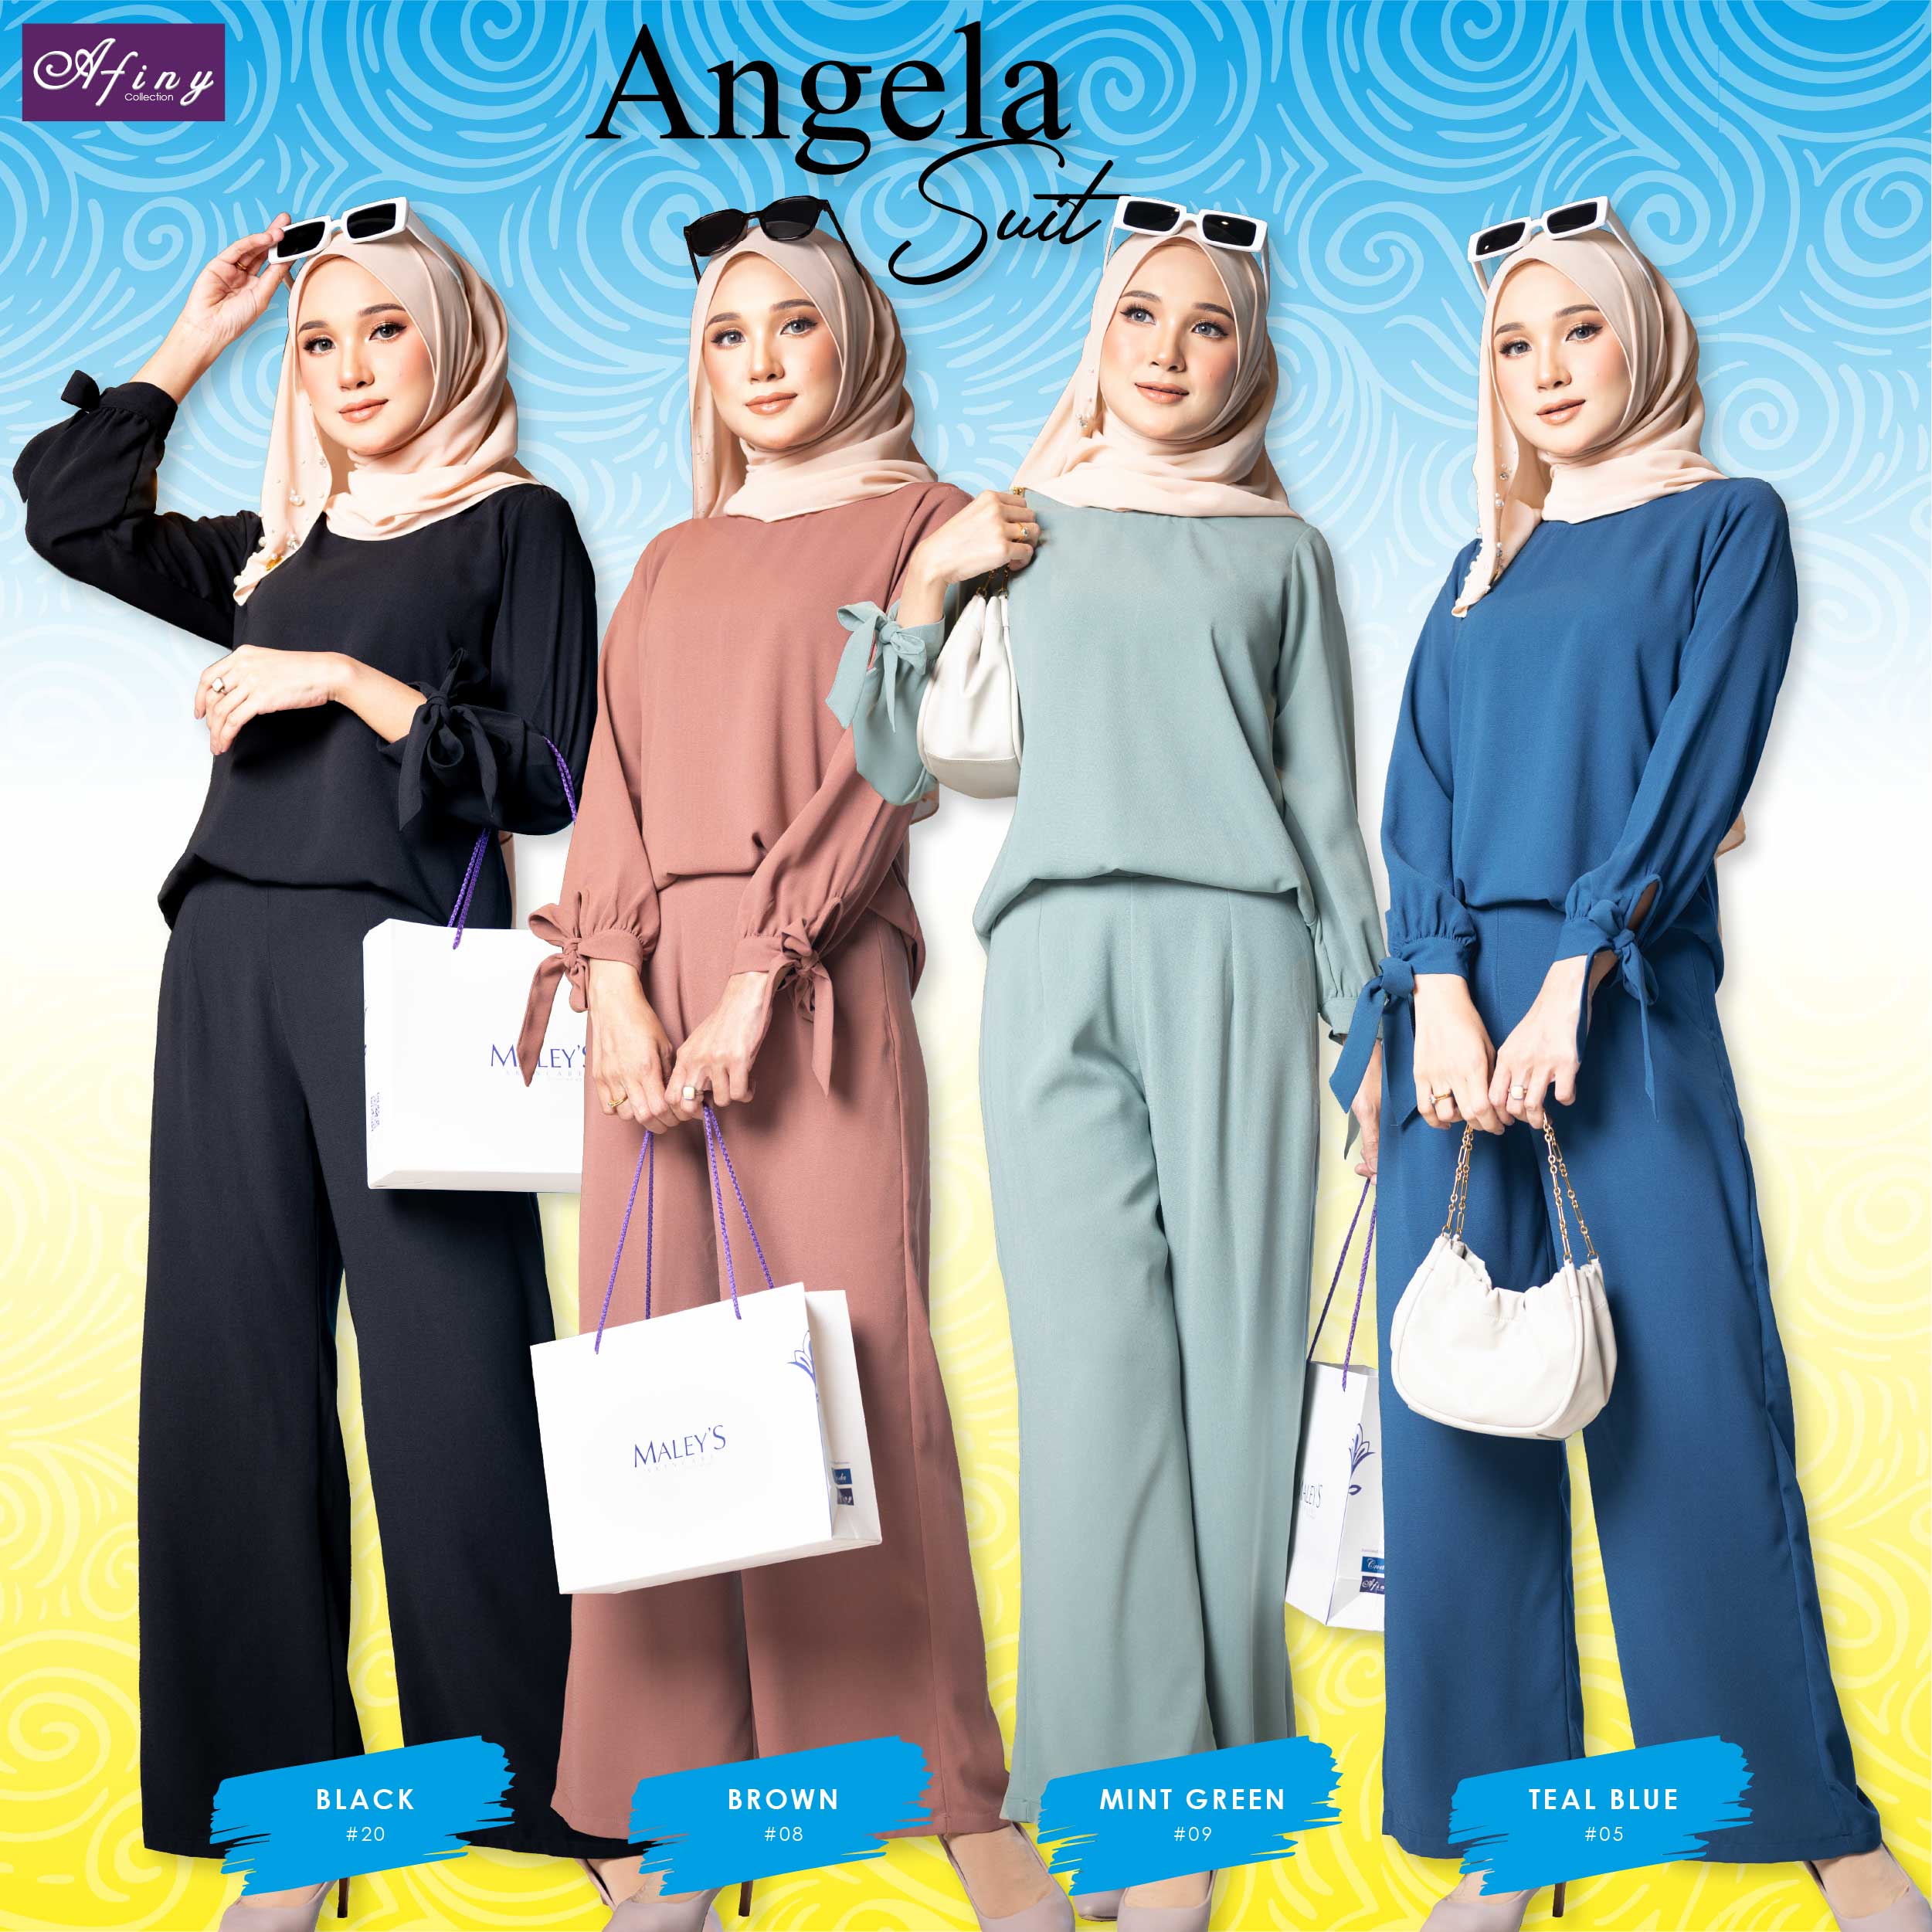 ANGELA SUIT - NEW Muslimah Suit launched